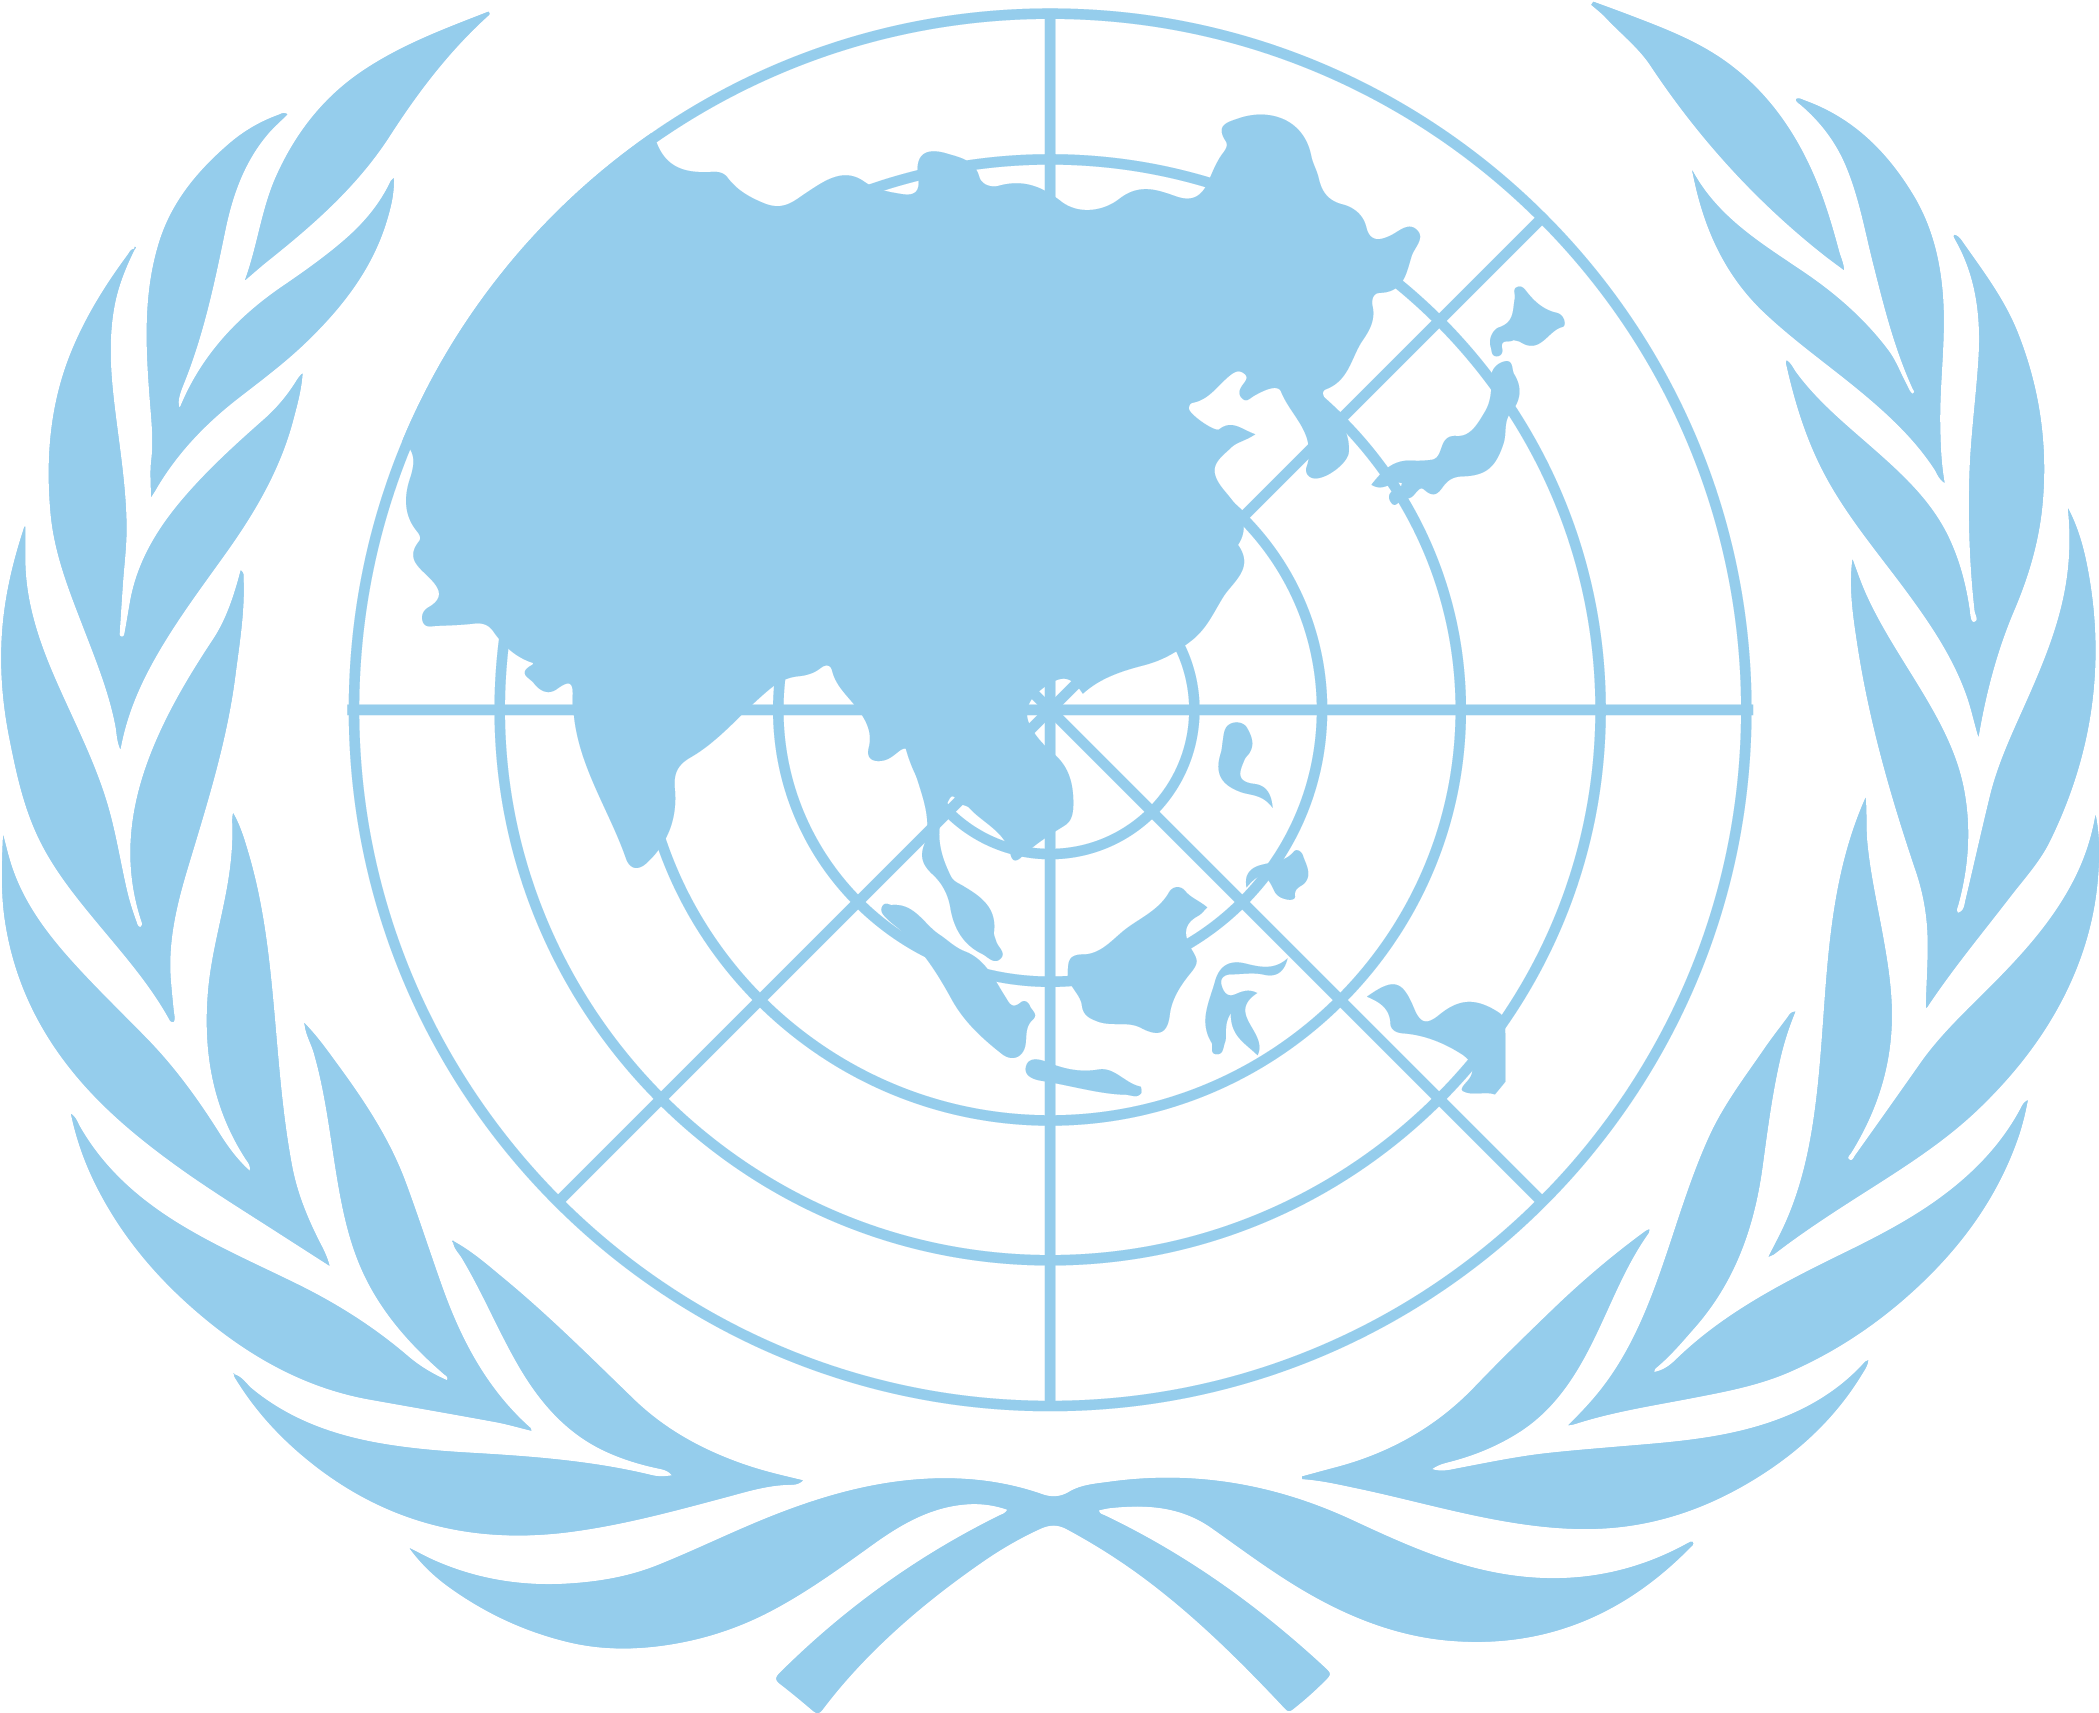 United Nations Flag PNG HD Quality